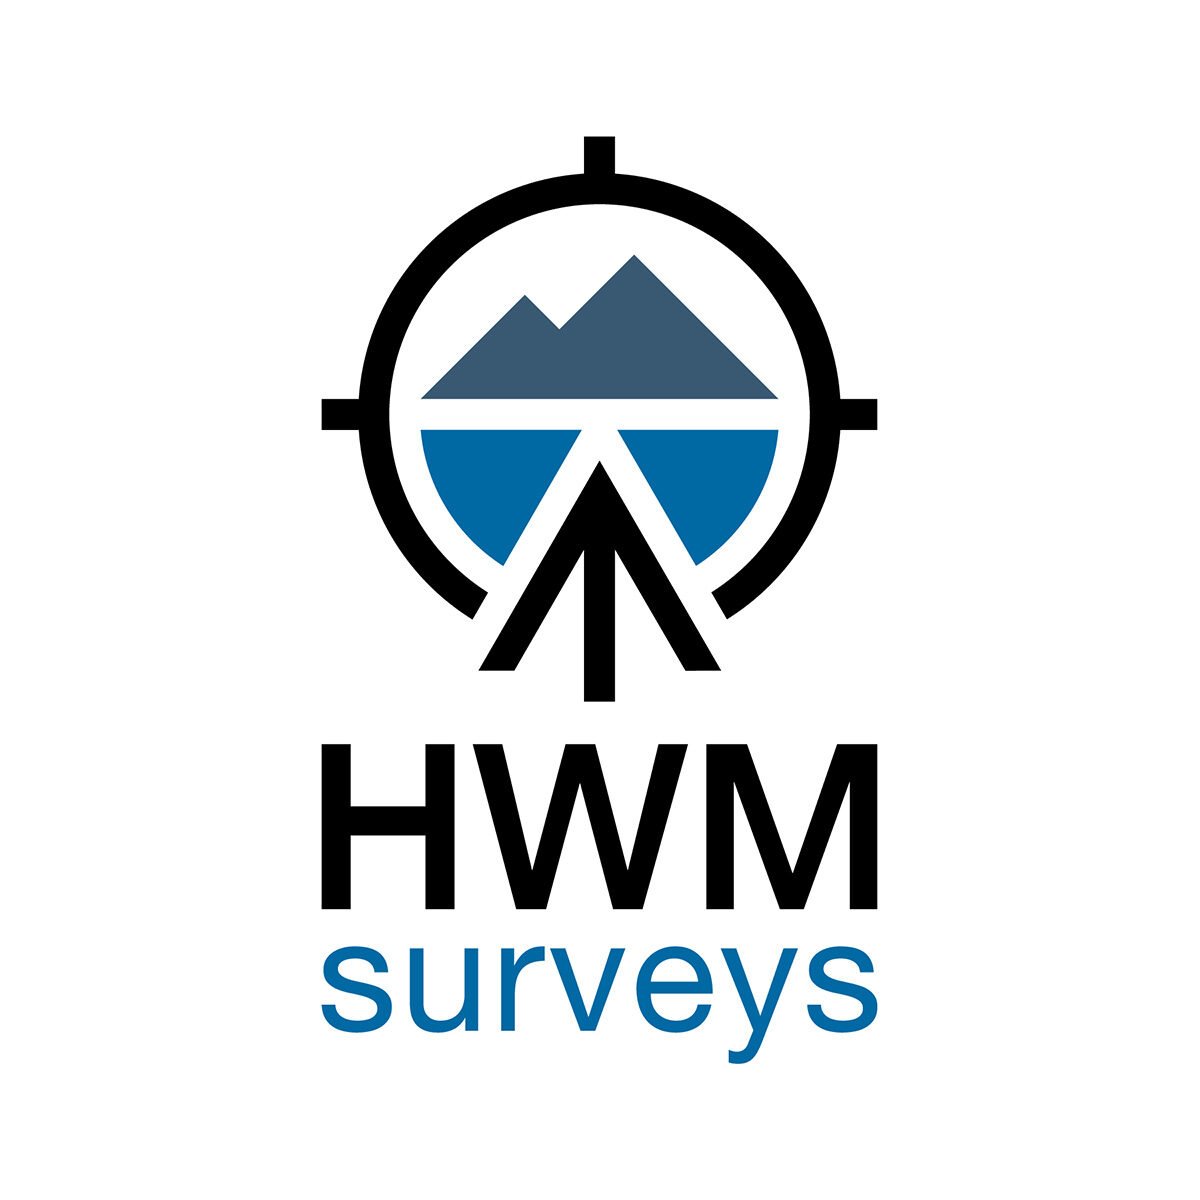 lindsay-mcghee-designs-hwm-surveys-logo-stacked-1200